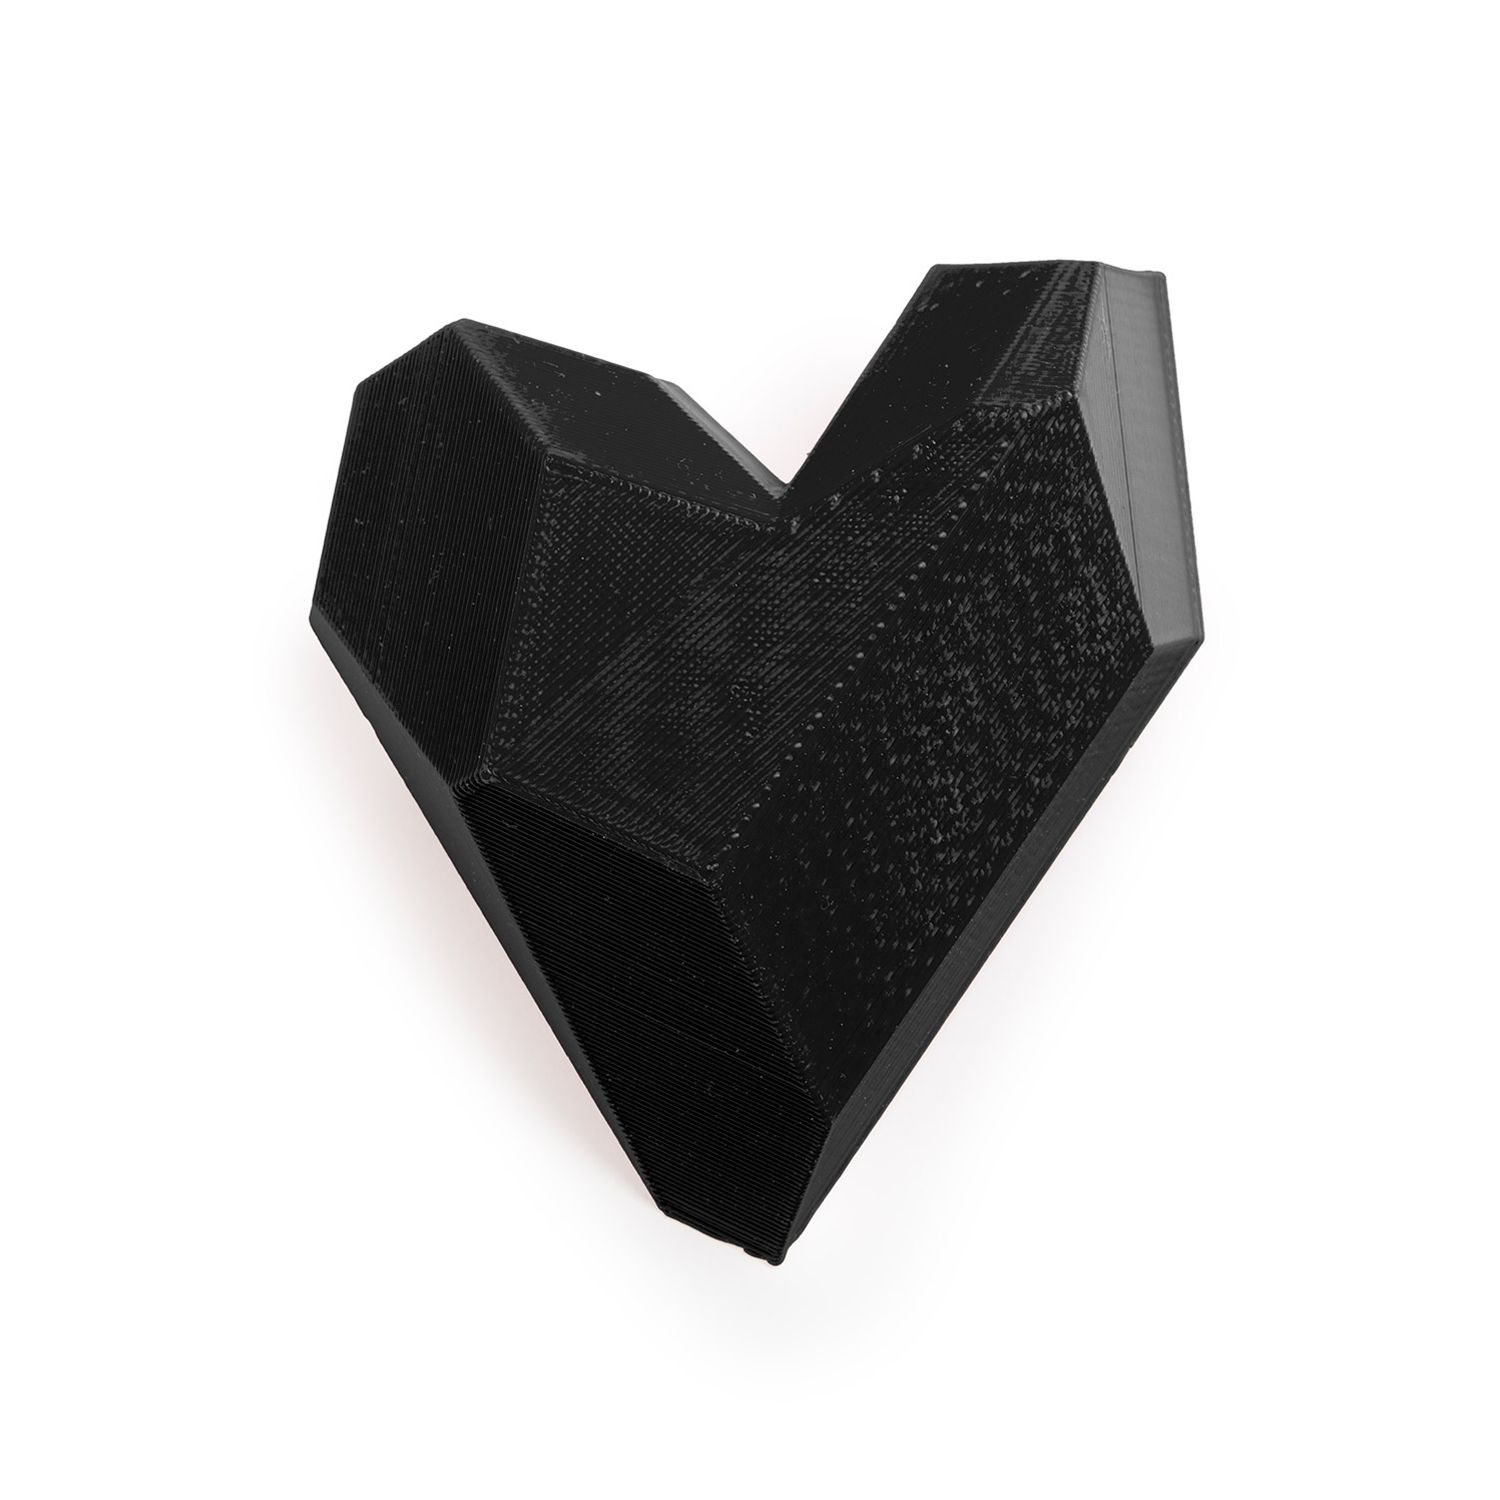 Maison 203: Mini Heart Brooch – Black Product Image 1 of 3